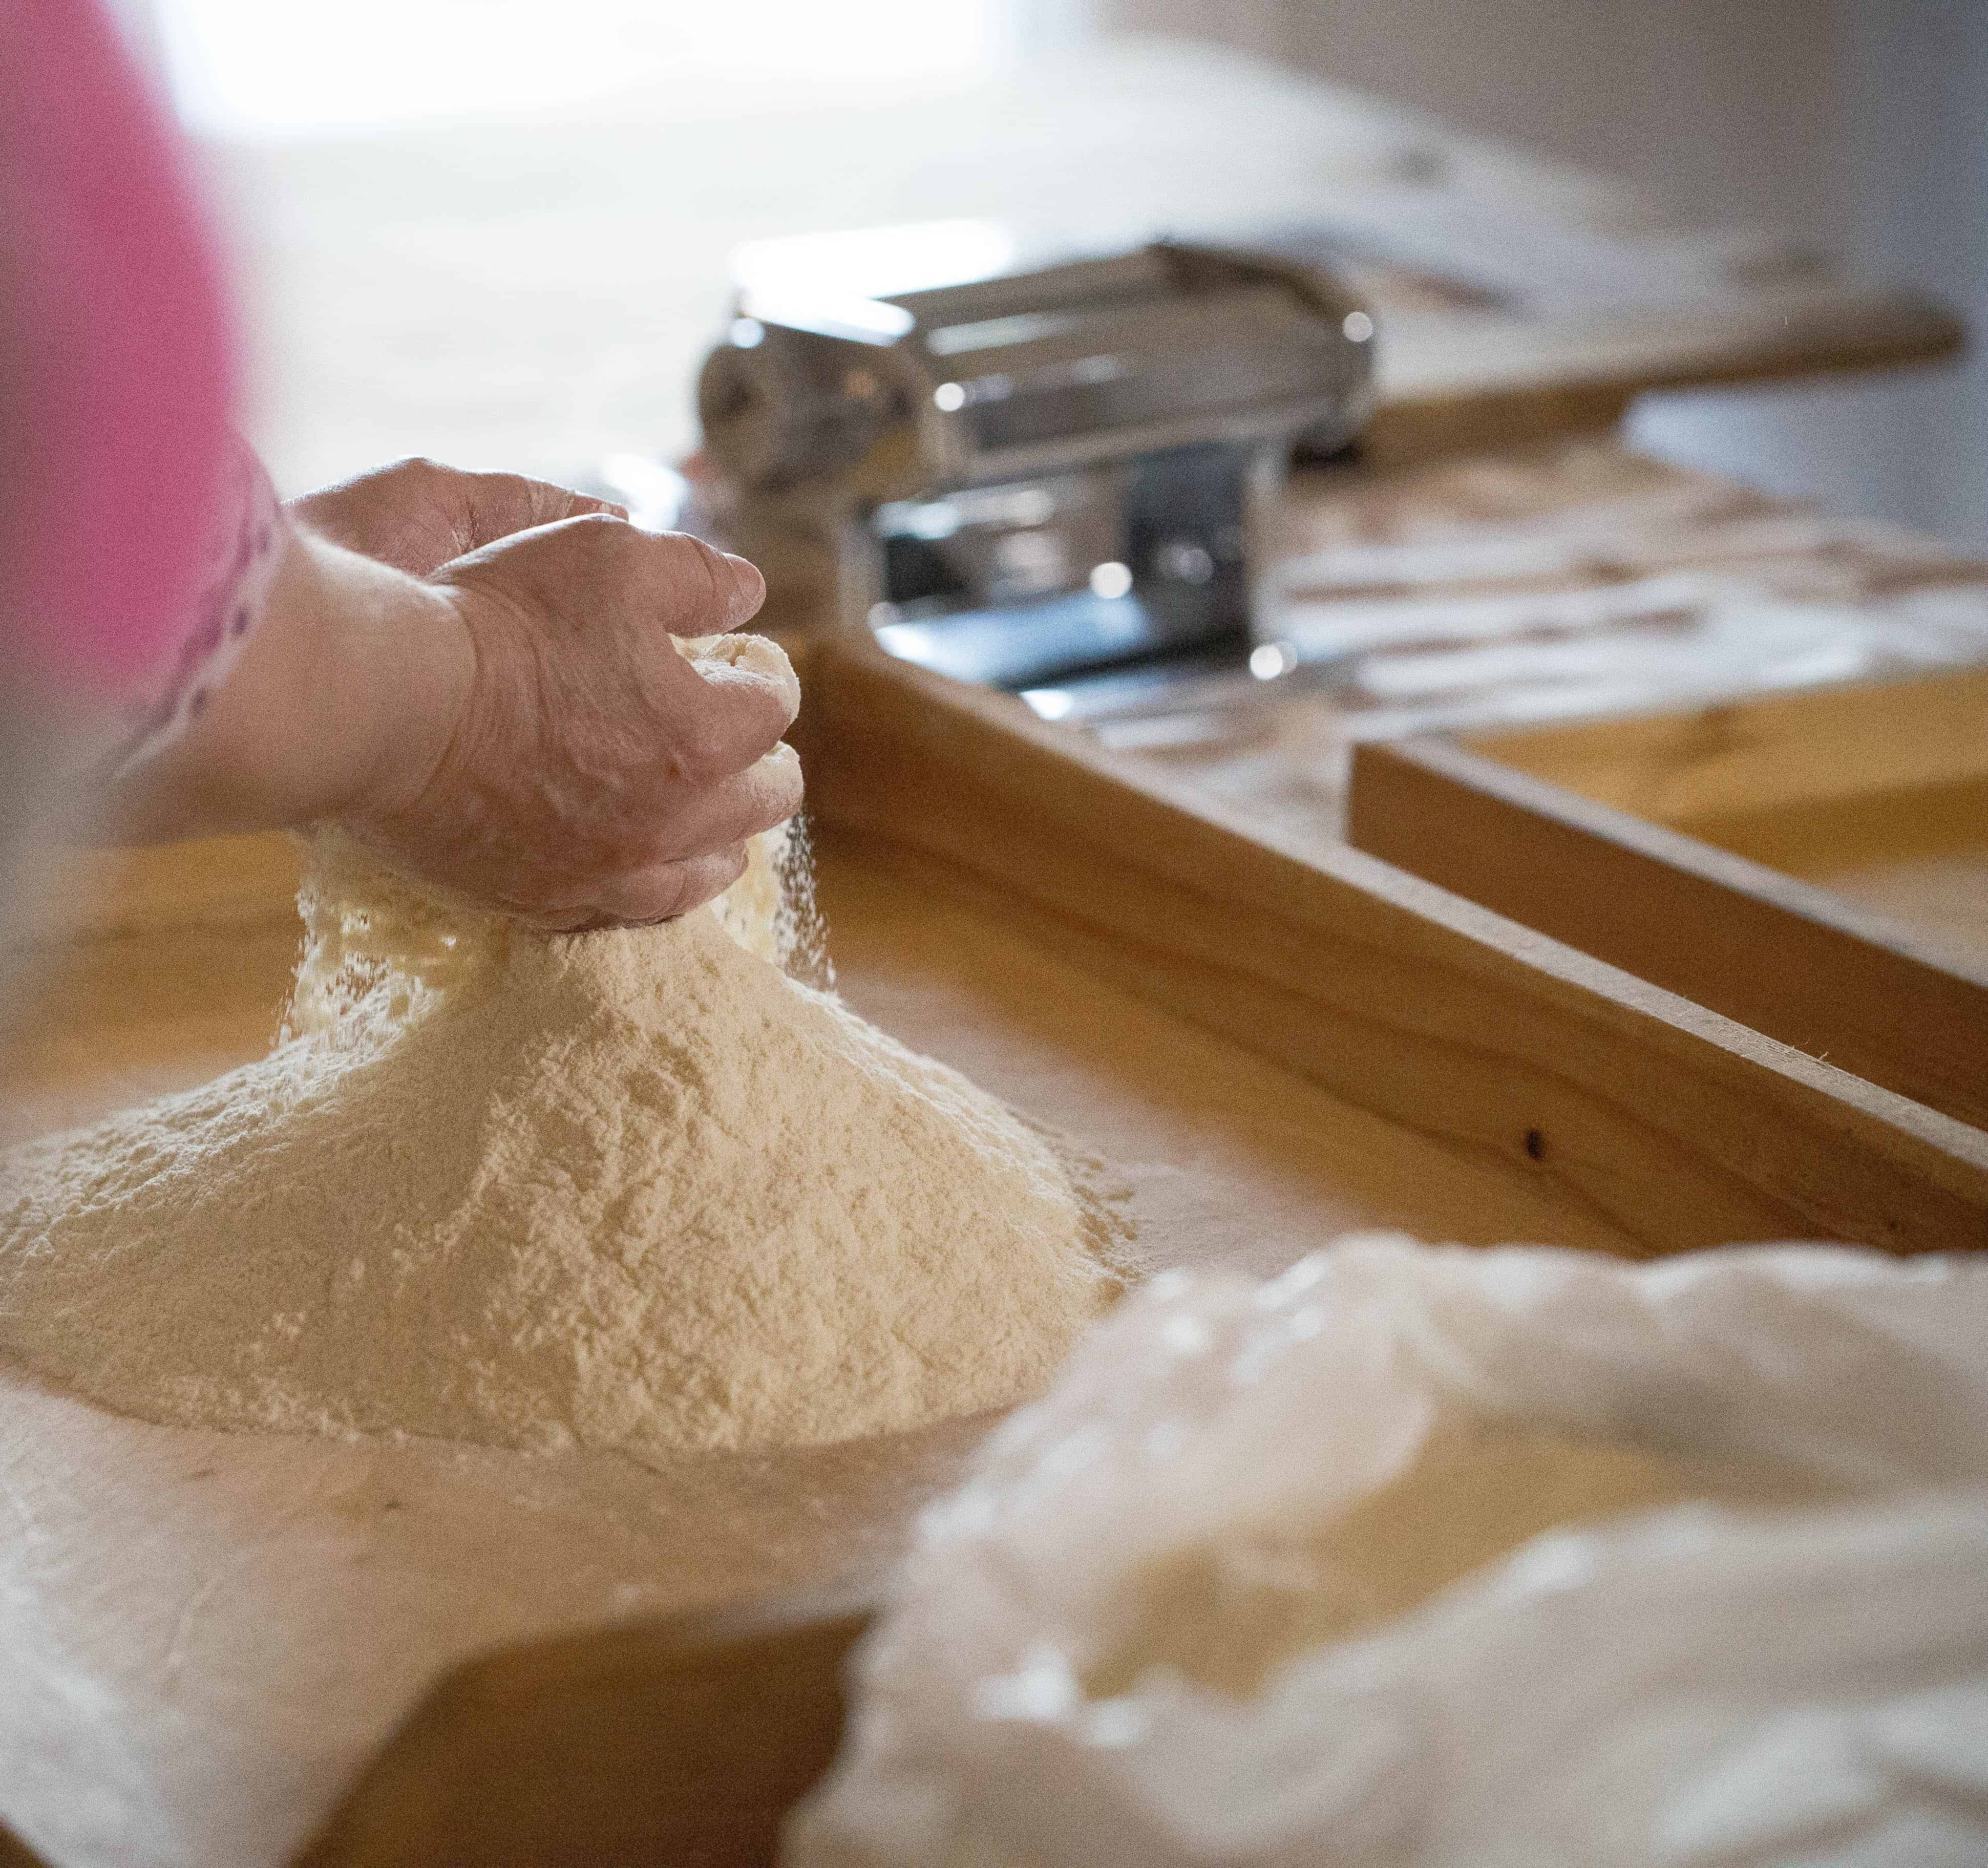 Flour being scooped in hands